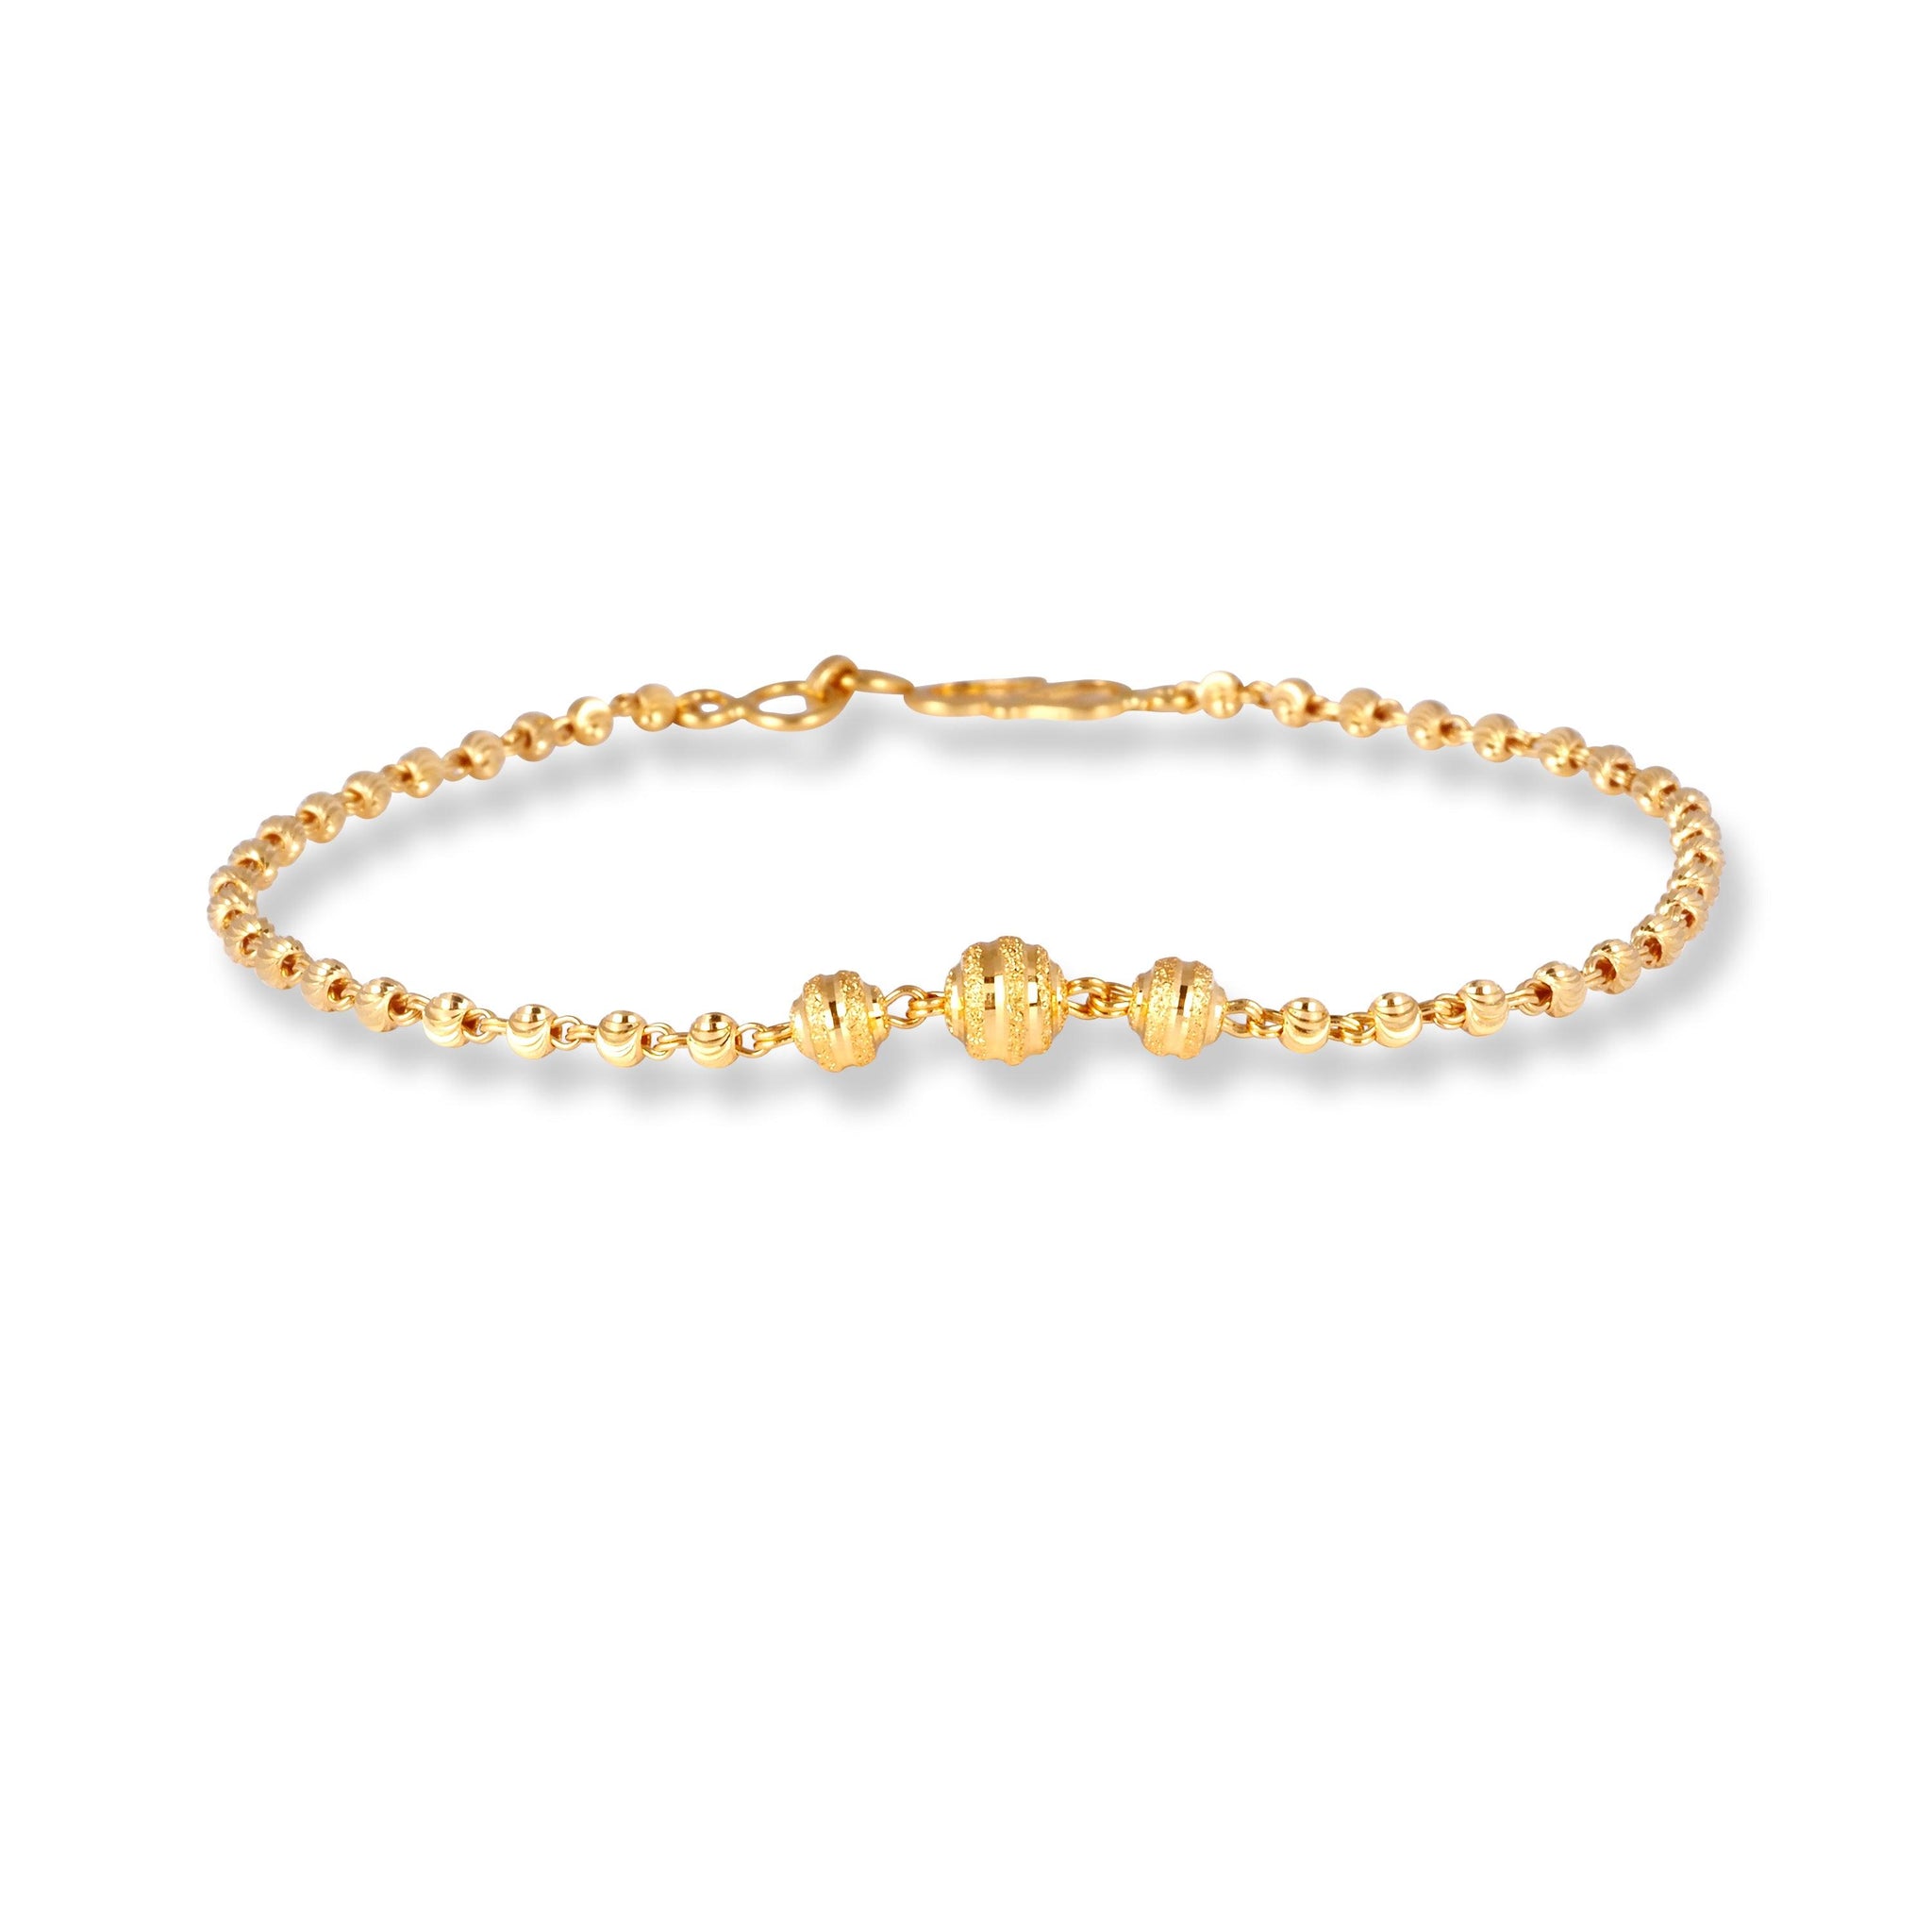 22ct Gold Ladies Three Diamond Cut Beads Bracelet with S Clasp LBR-7158